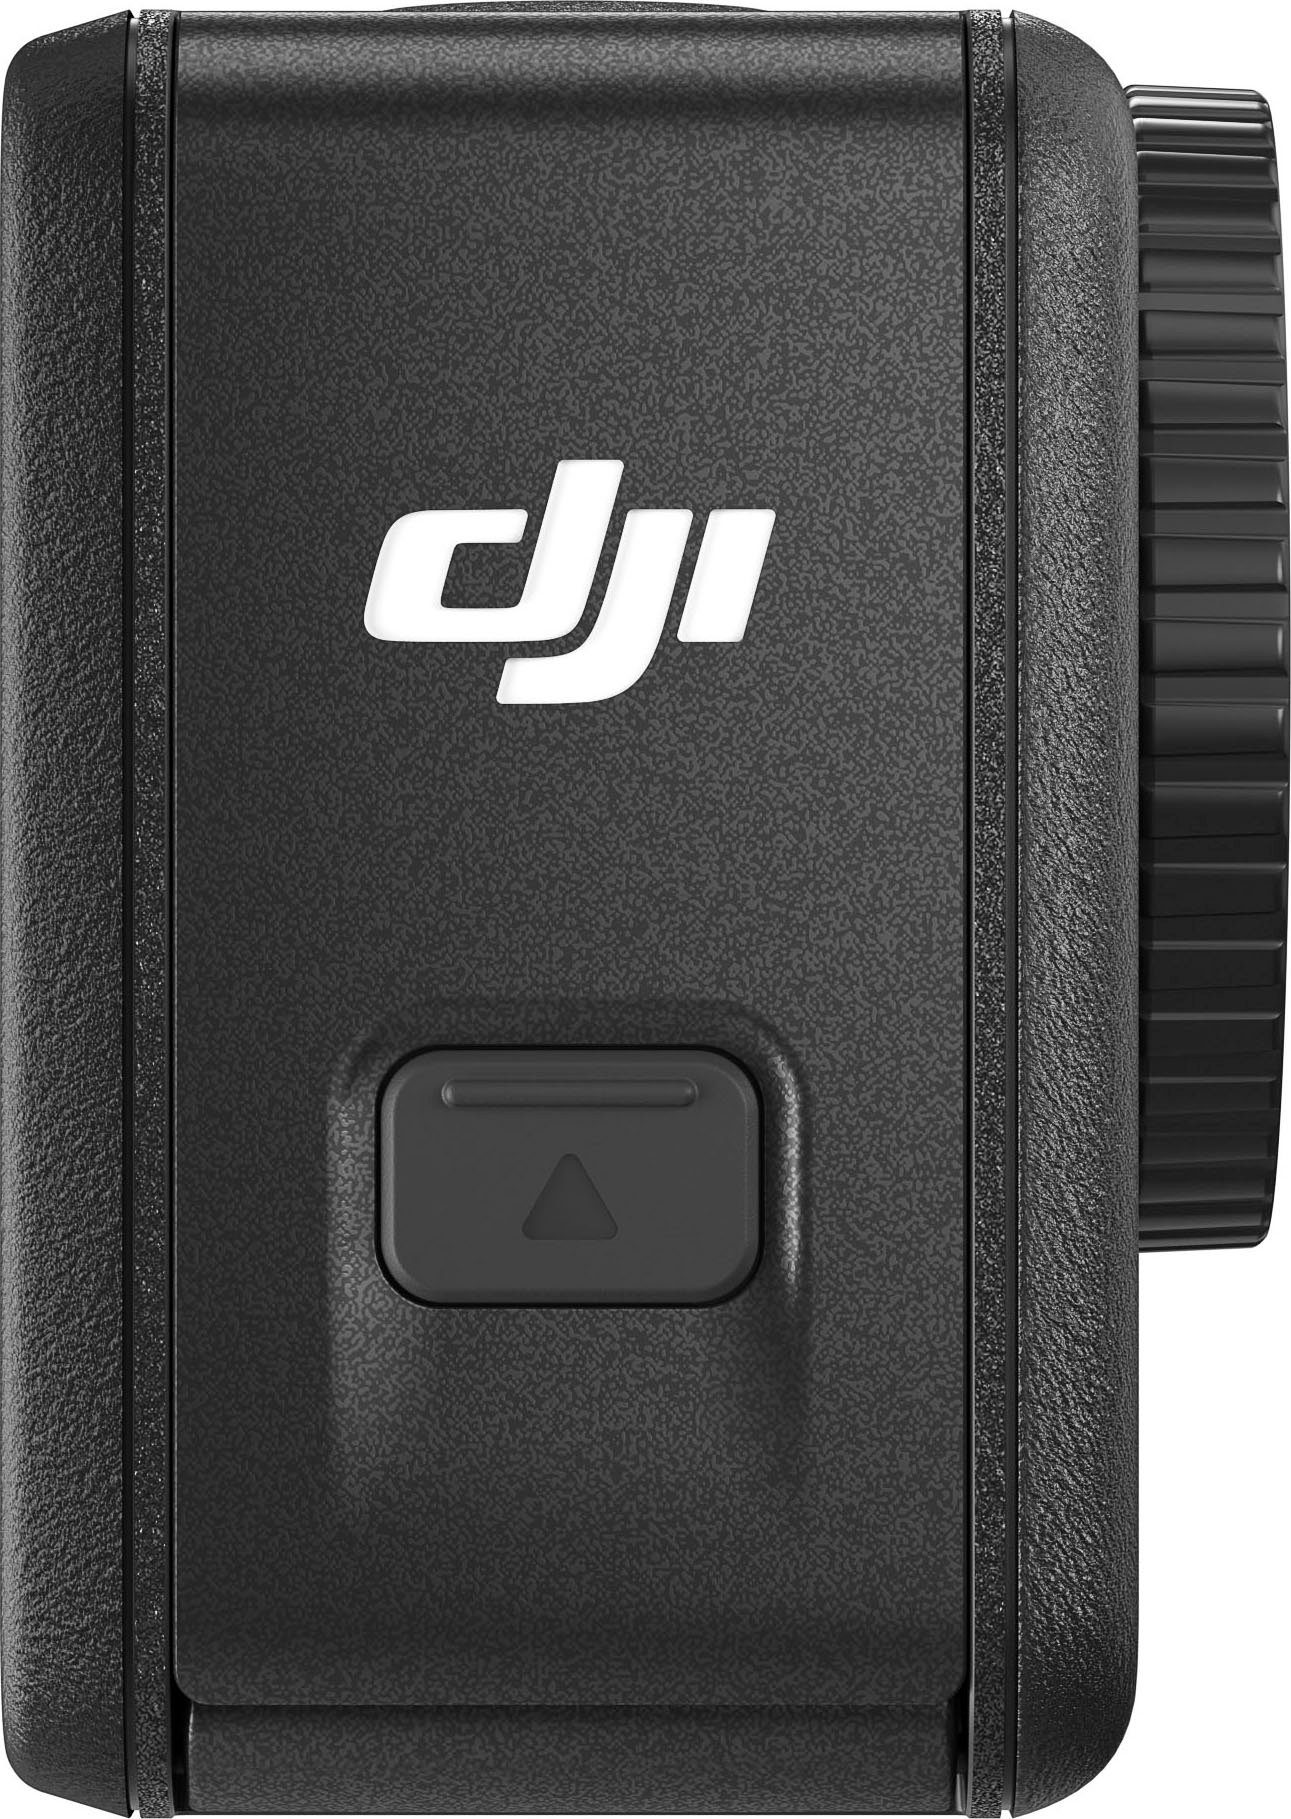 Action Ultra Bluetooth, Osmo Camcorder WLAN Combo 4 (4K (Wi-Fi) HD, DJI Standard